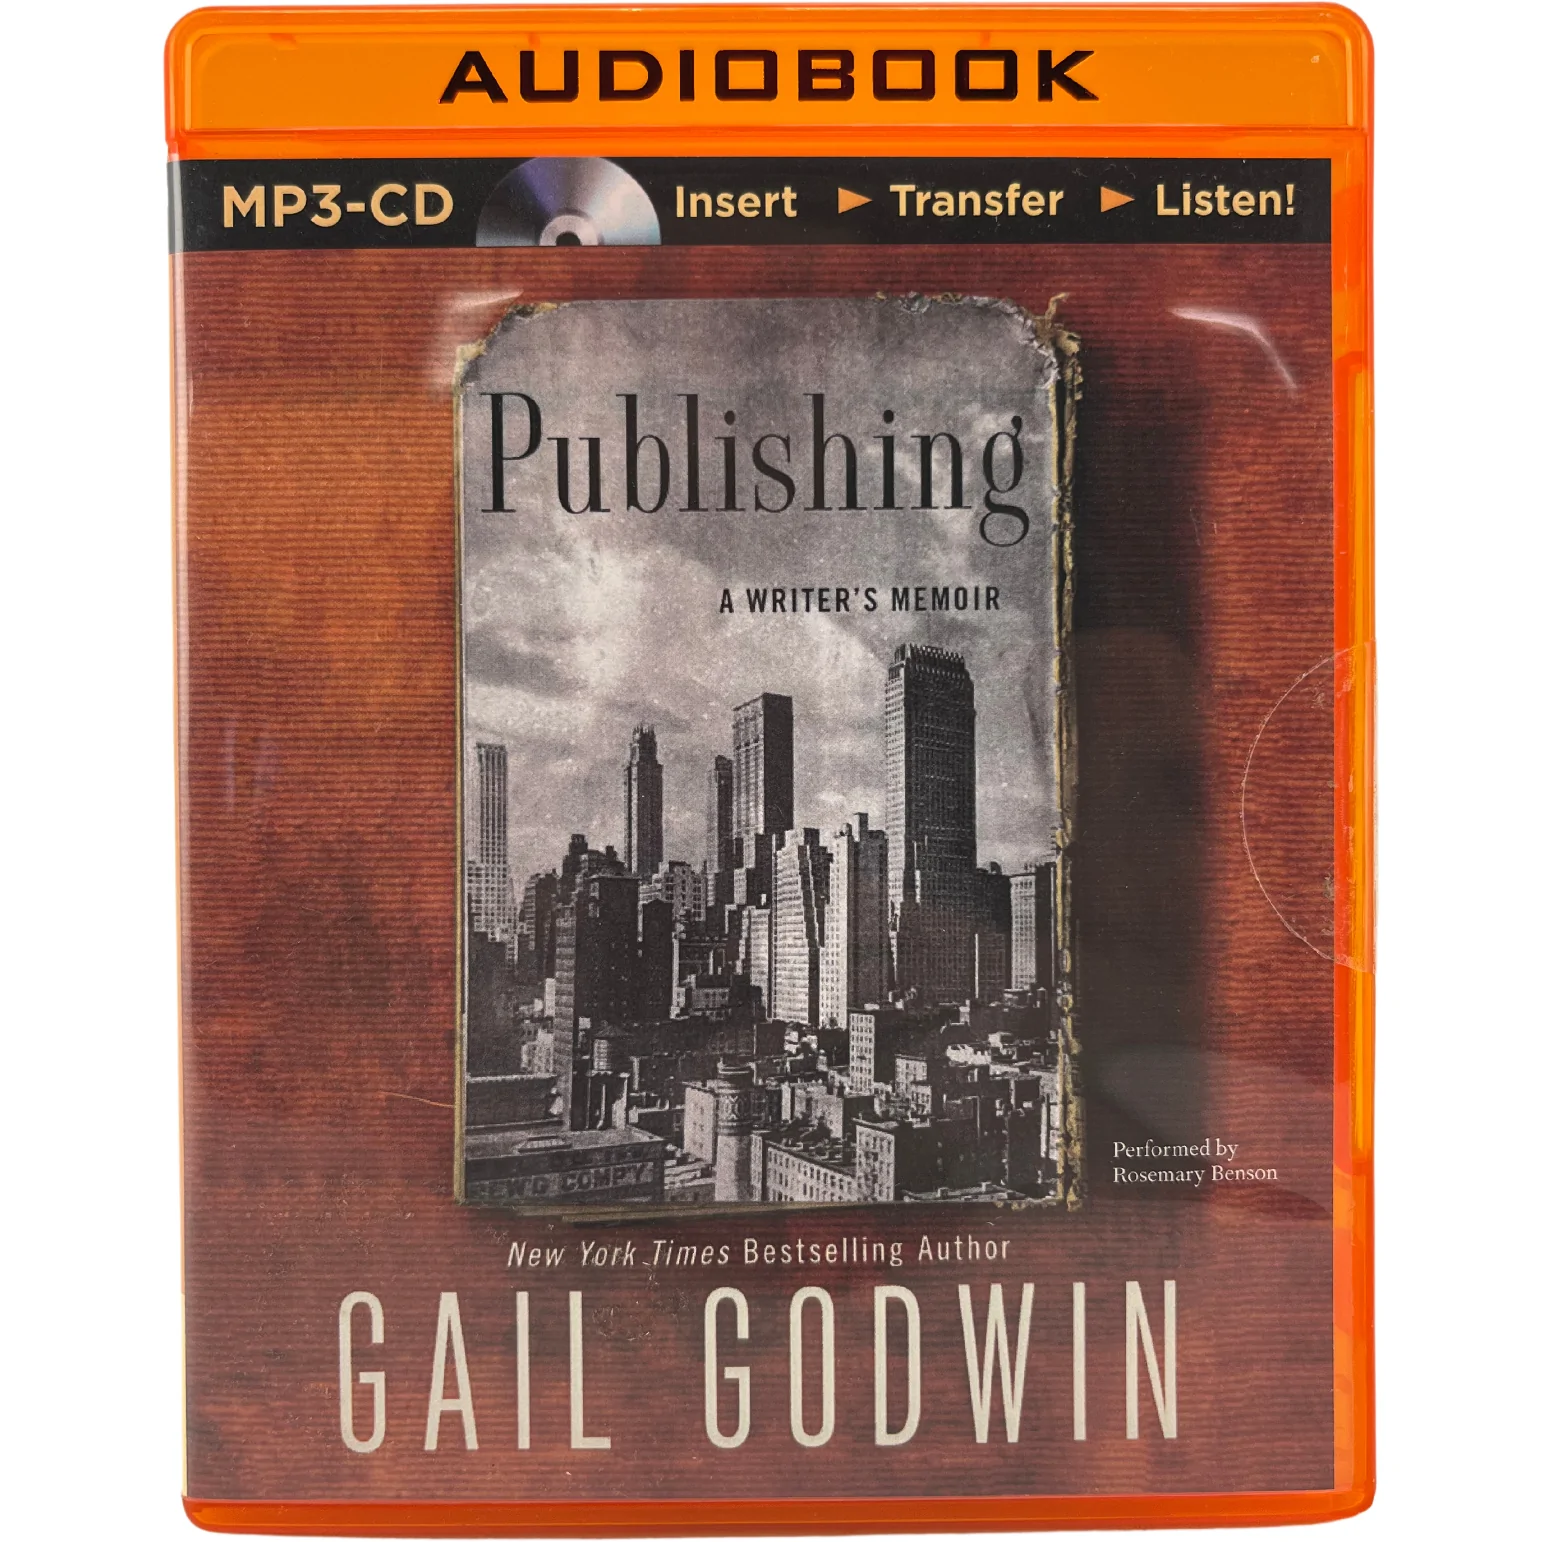 Audio Book Publishing A Writer's Memoir / Author Gail Godwin / MP3